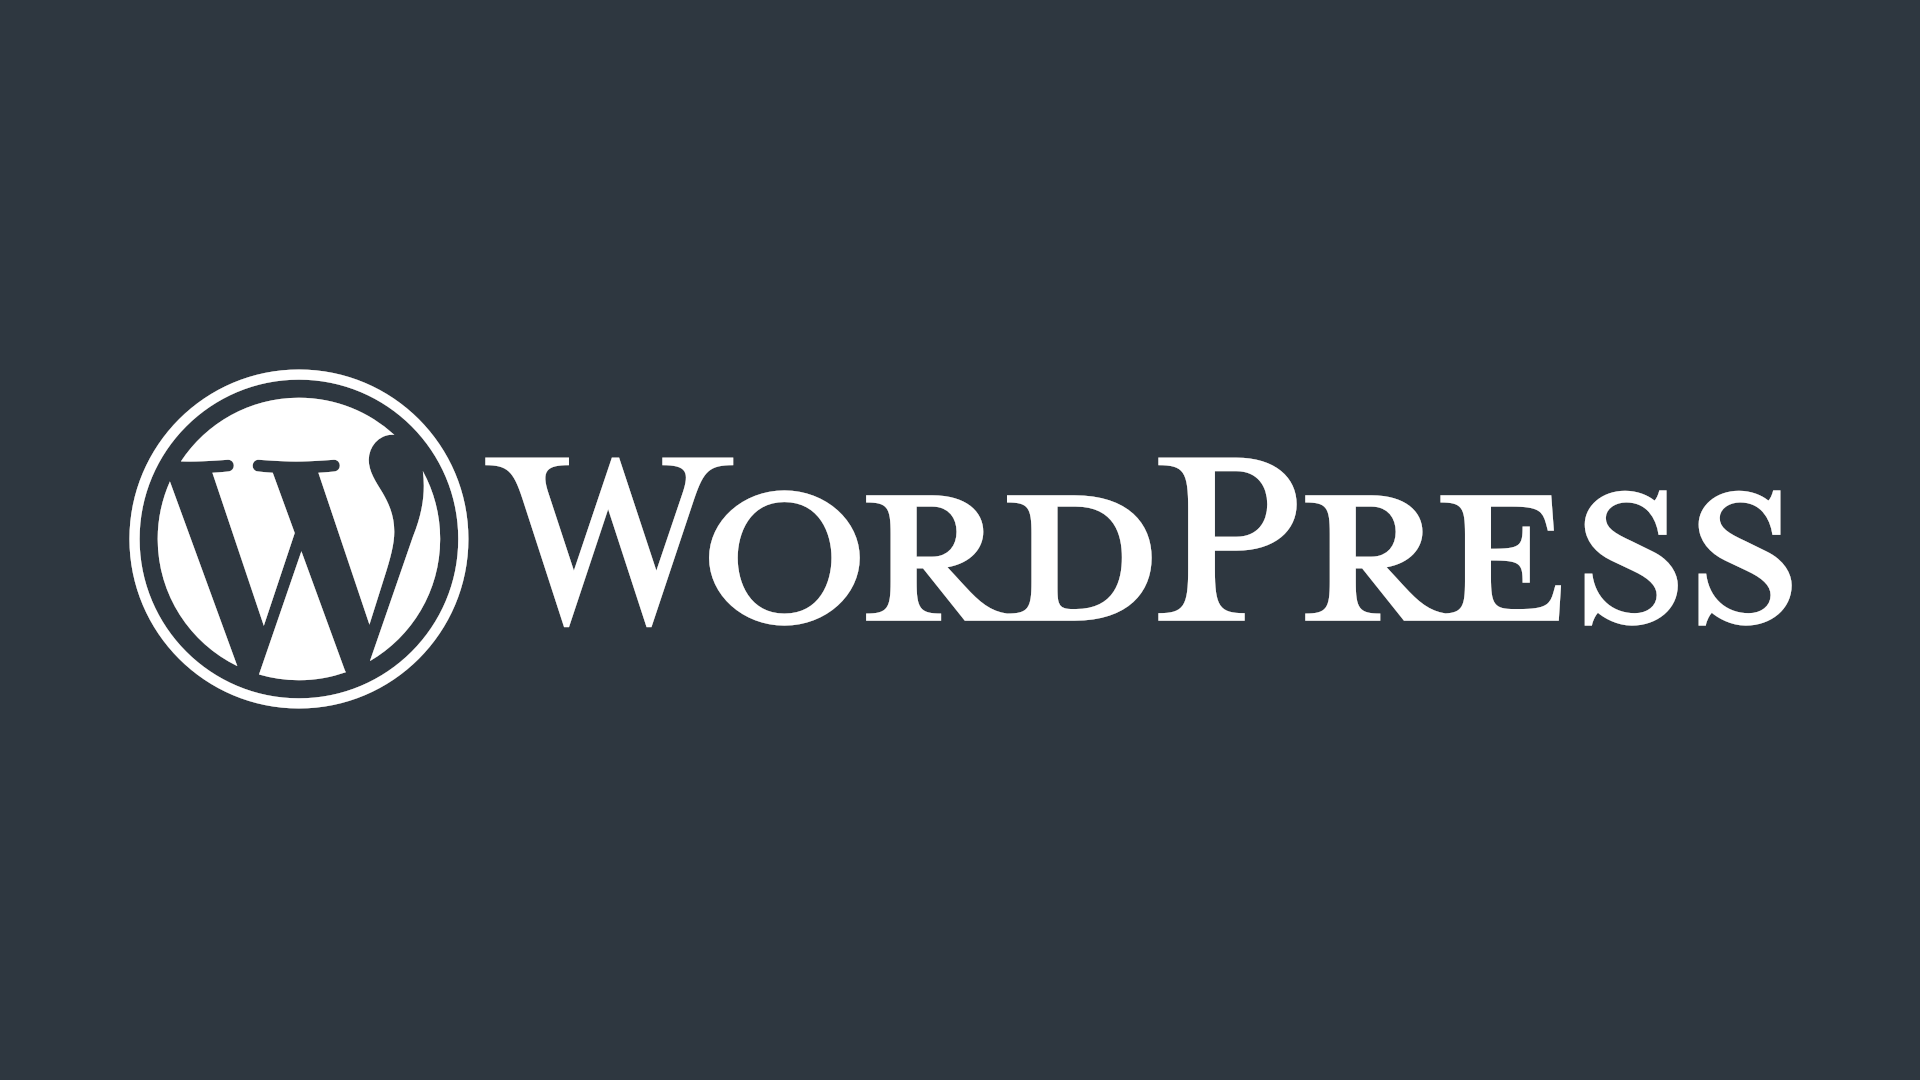 Annual Survey • WordPress Playground • Plugins/themes Categorization